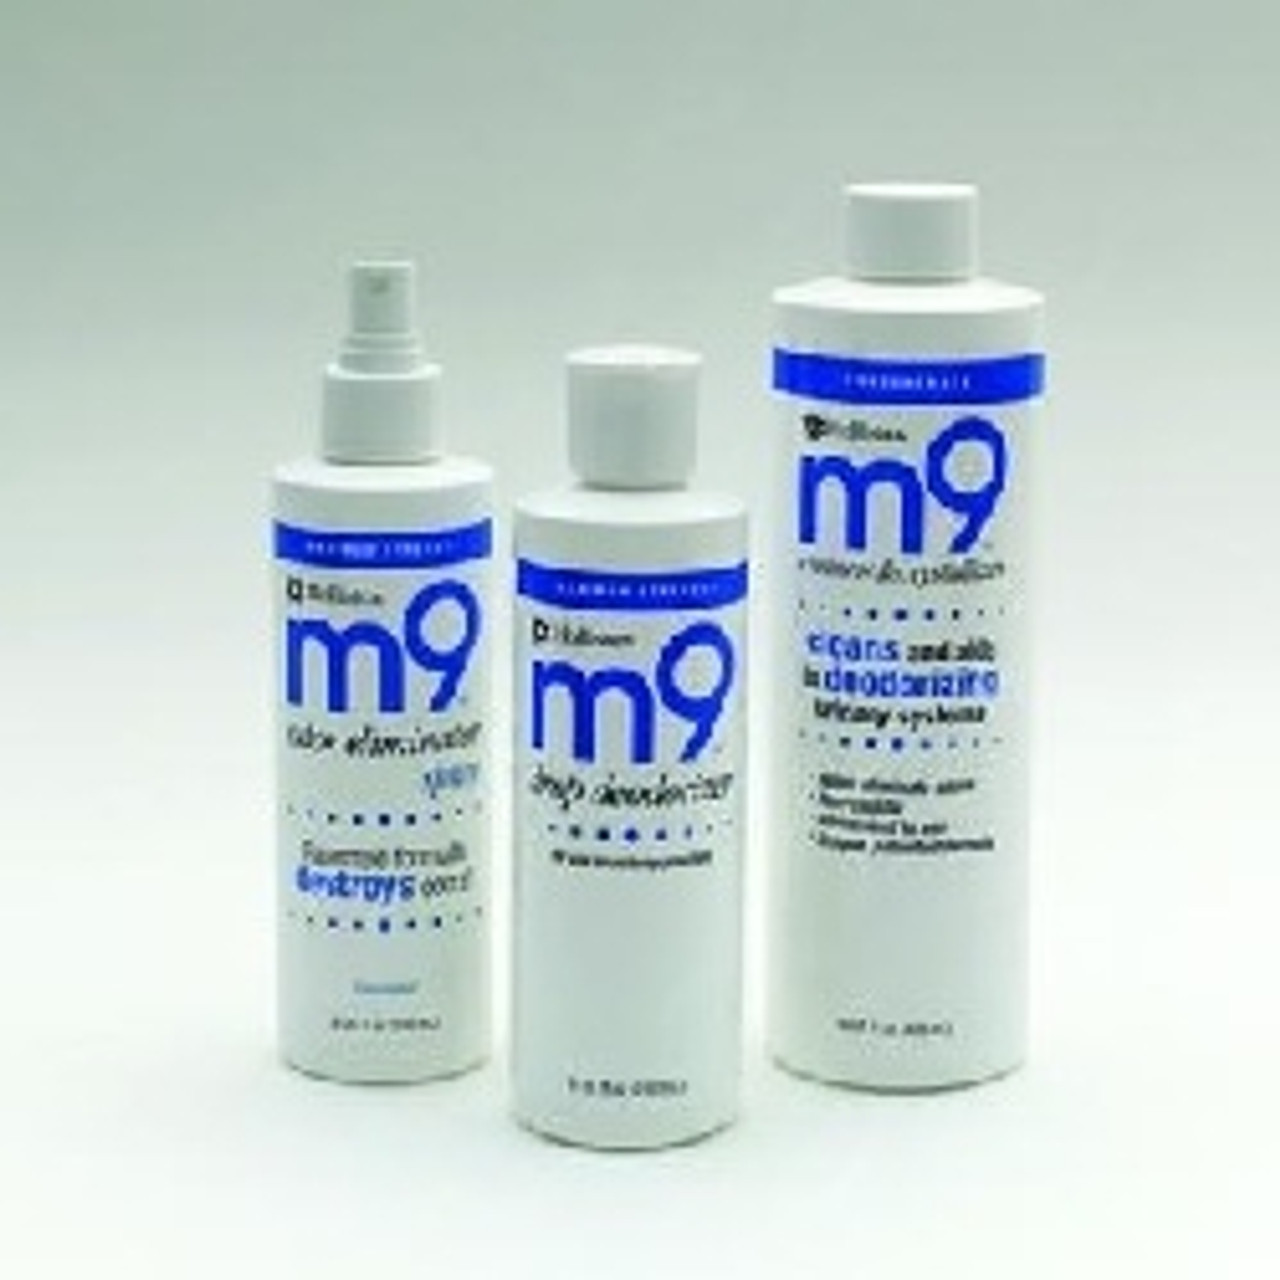 Hollister - m9 Odor Eliminator Spray